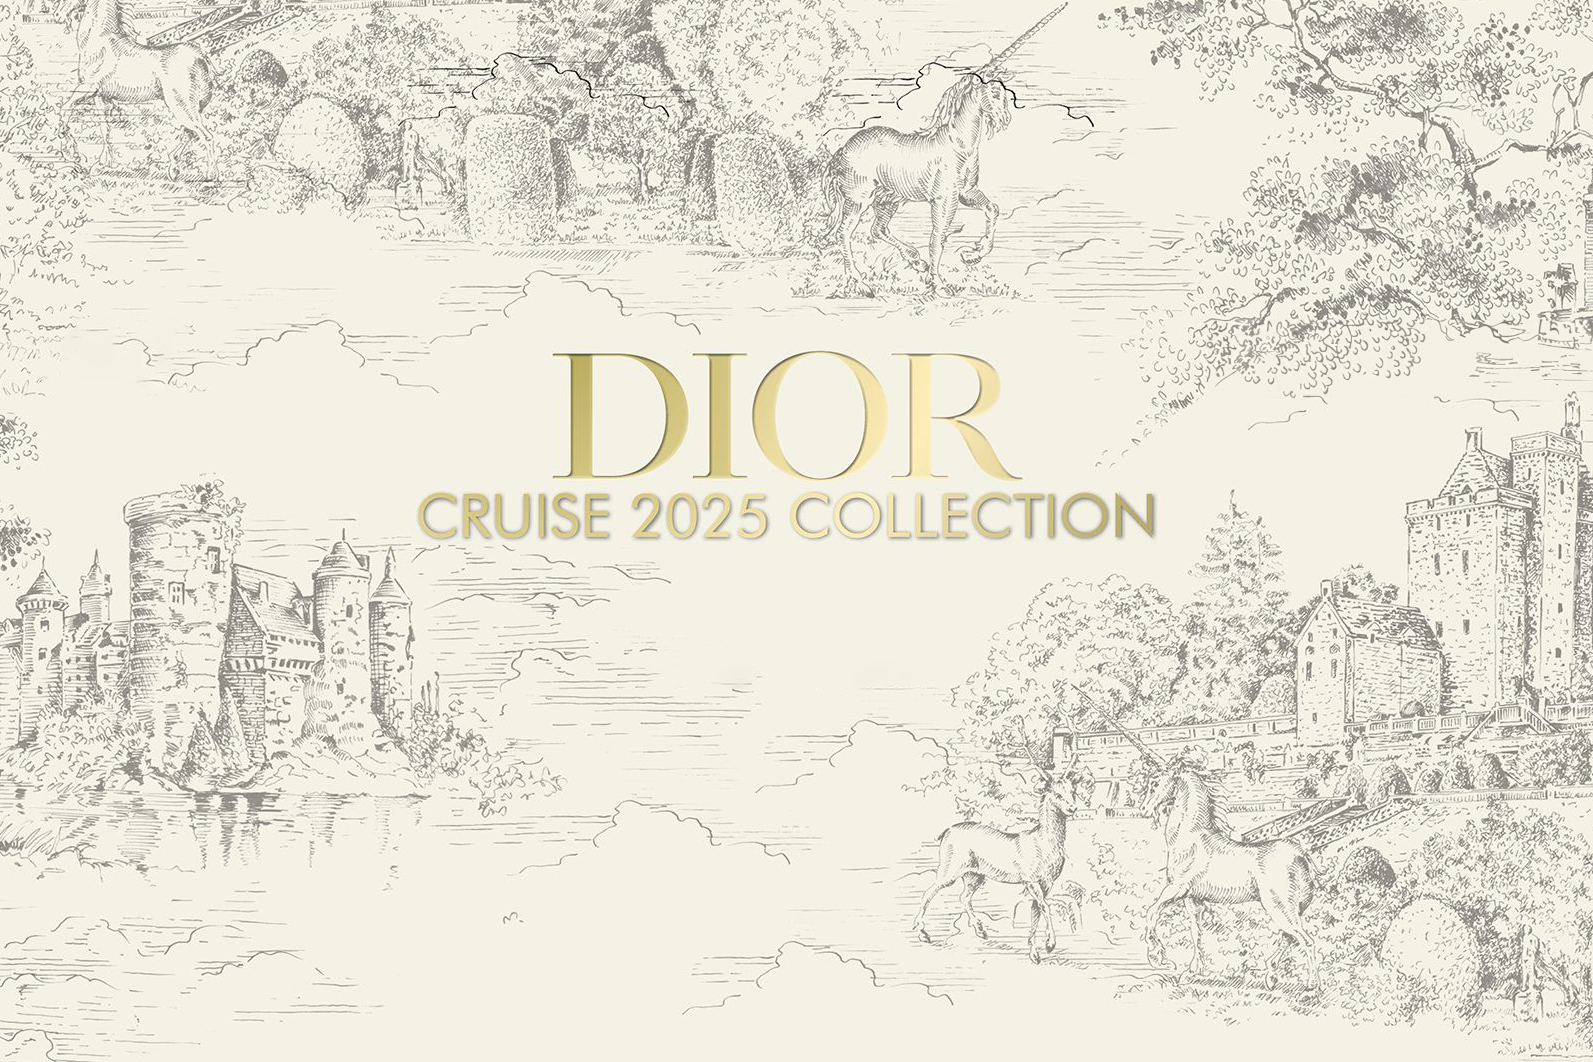 Watch Dior Cruise 2025 fashion show live